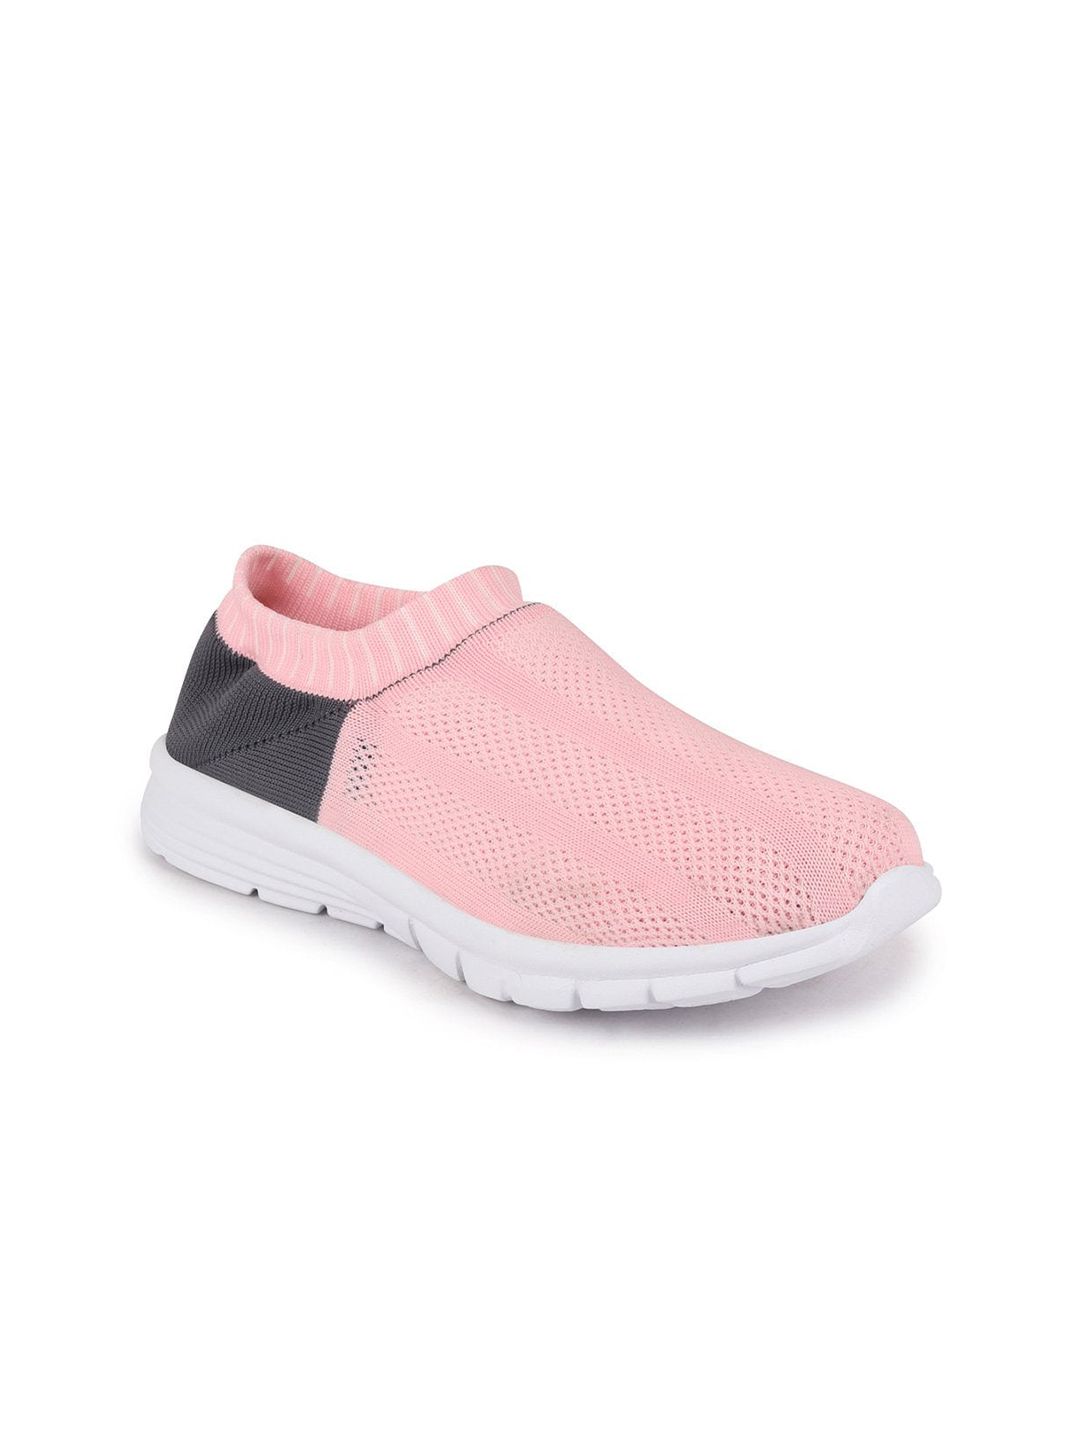 FAUSTO Women Pink Mesh Walking Non-Marking Sports Shoes Price in India